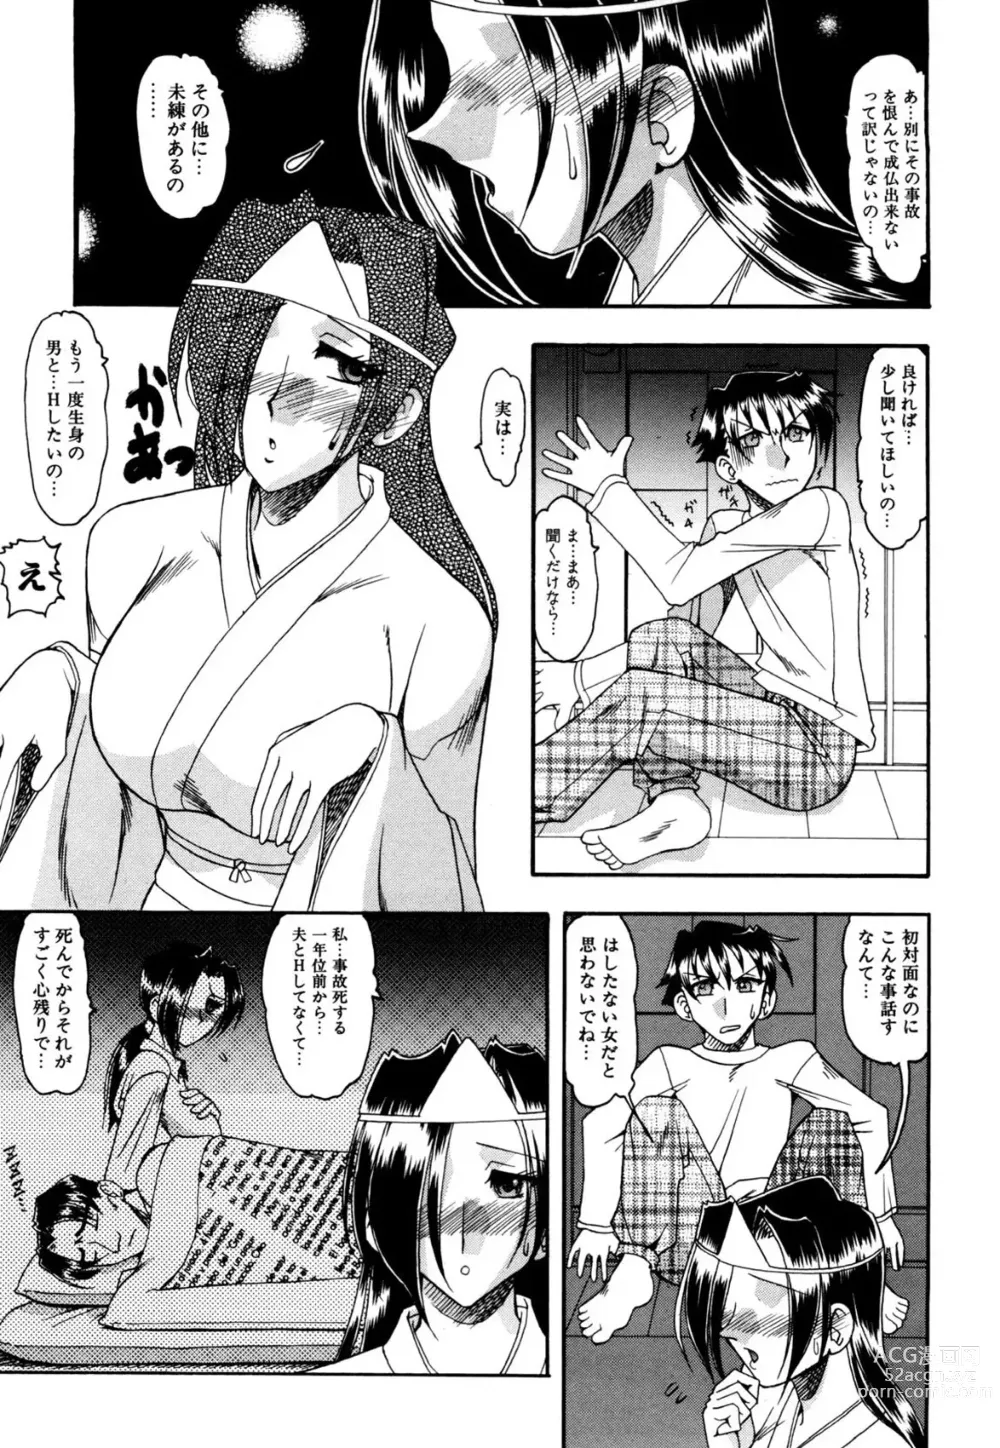 Page 132 of manga Mizugism